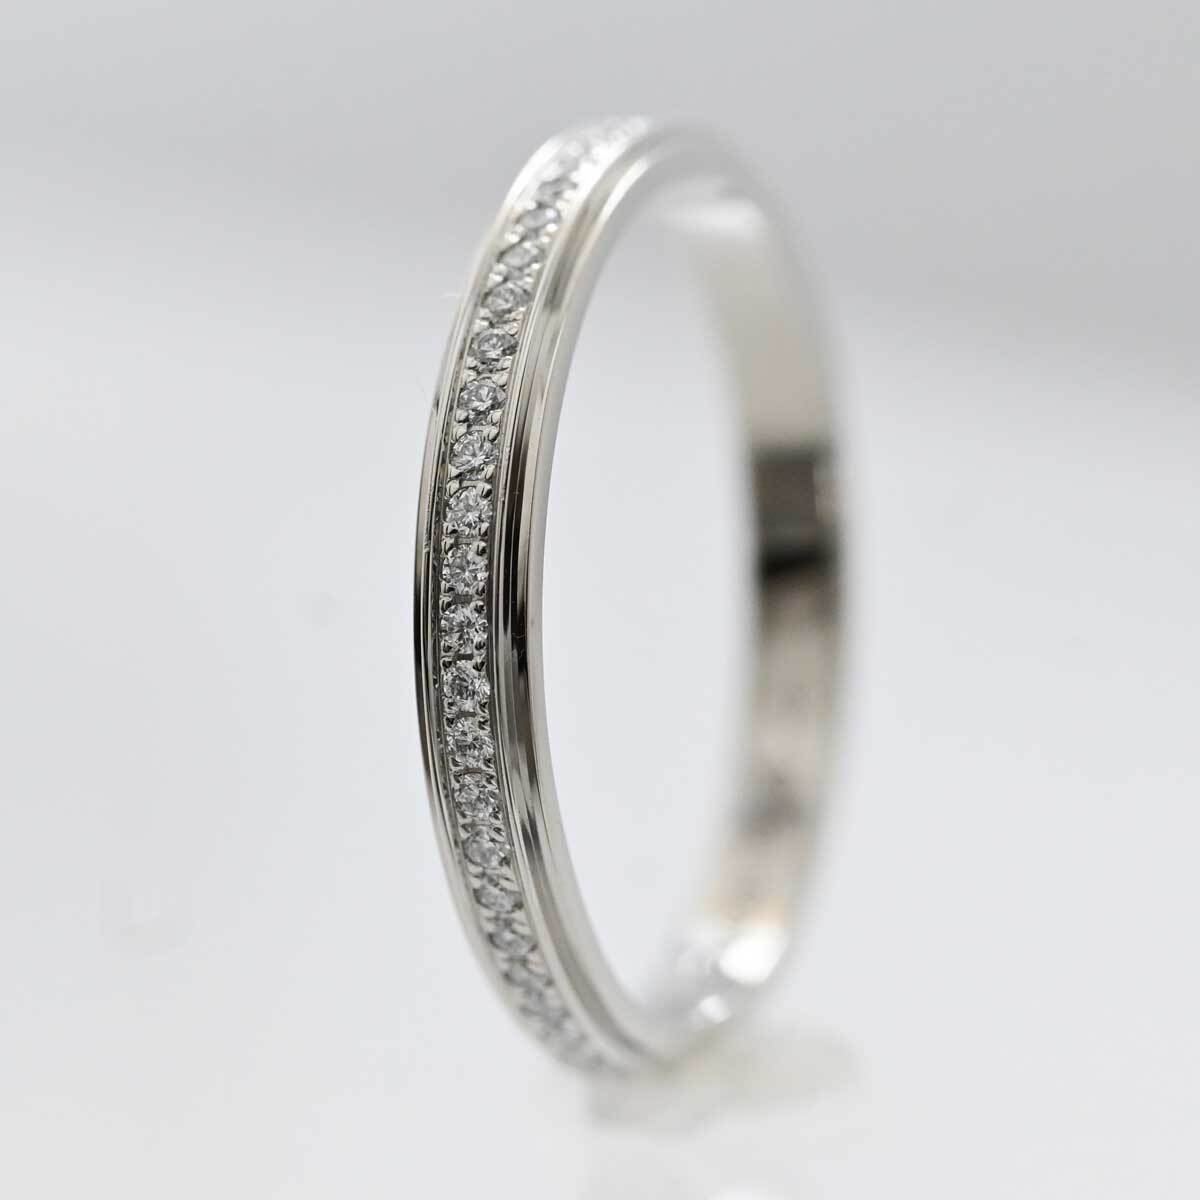  Cartier CARTIER PT950 platinum dam -ruu Eddie ng full diamond Eternity ring size 49 lady's 3487